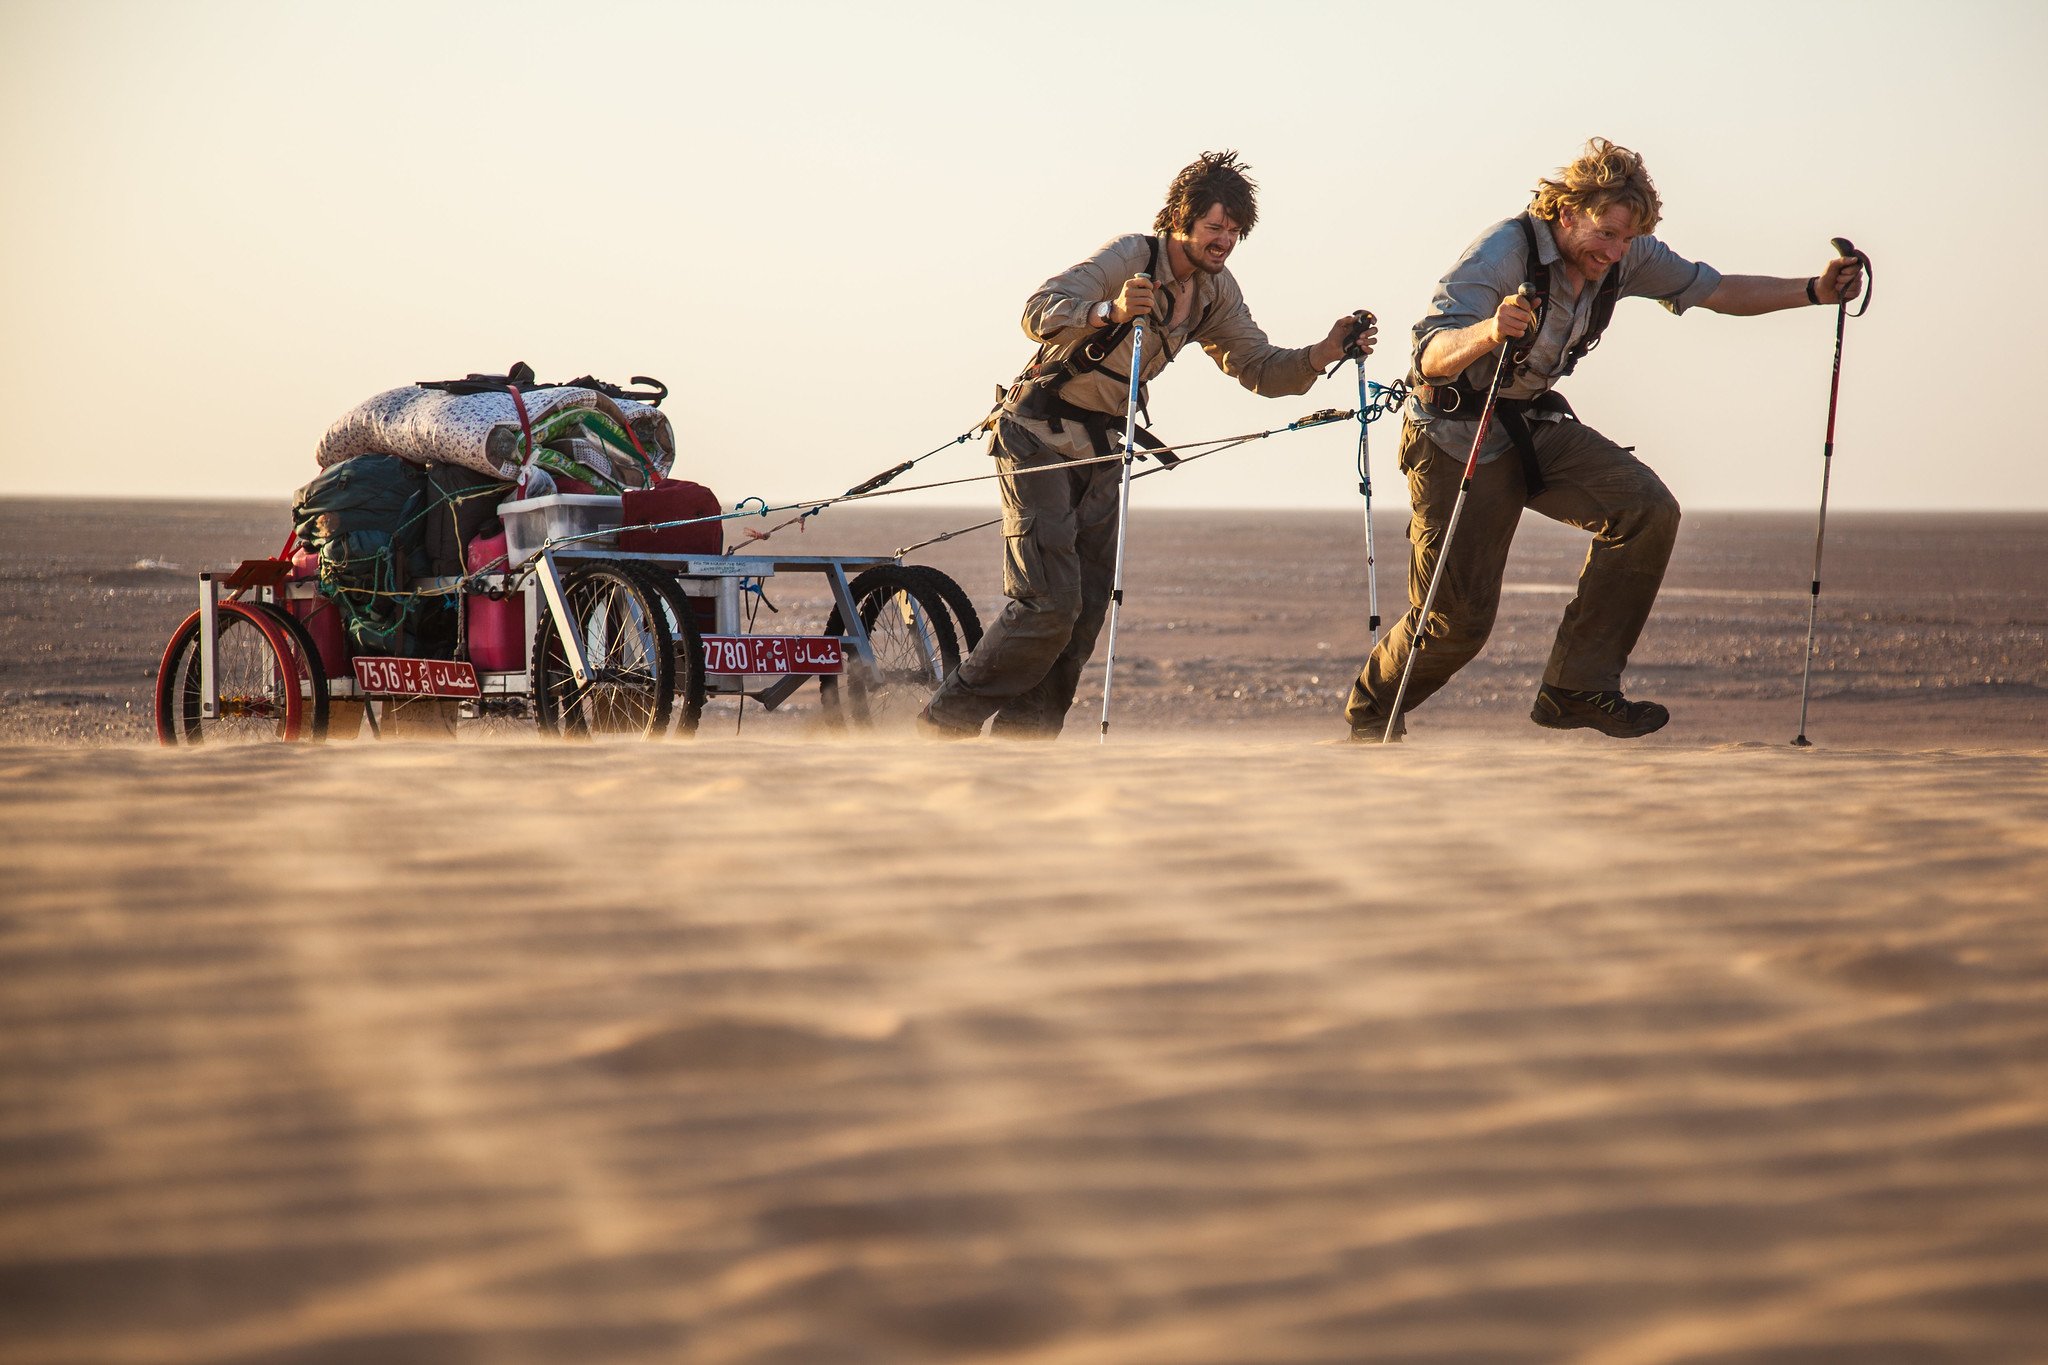 Alastair Humphreys and Leon McCarron pulling a cart across the Empty Quarter desert